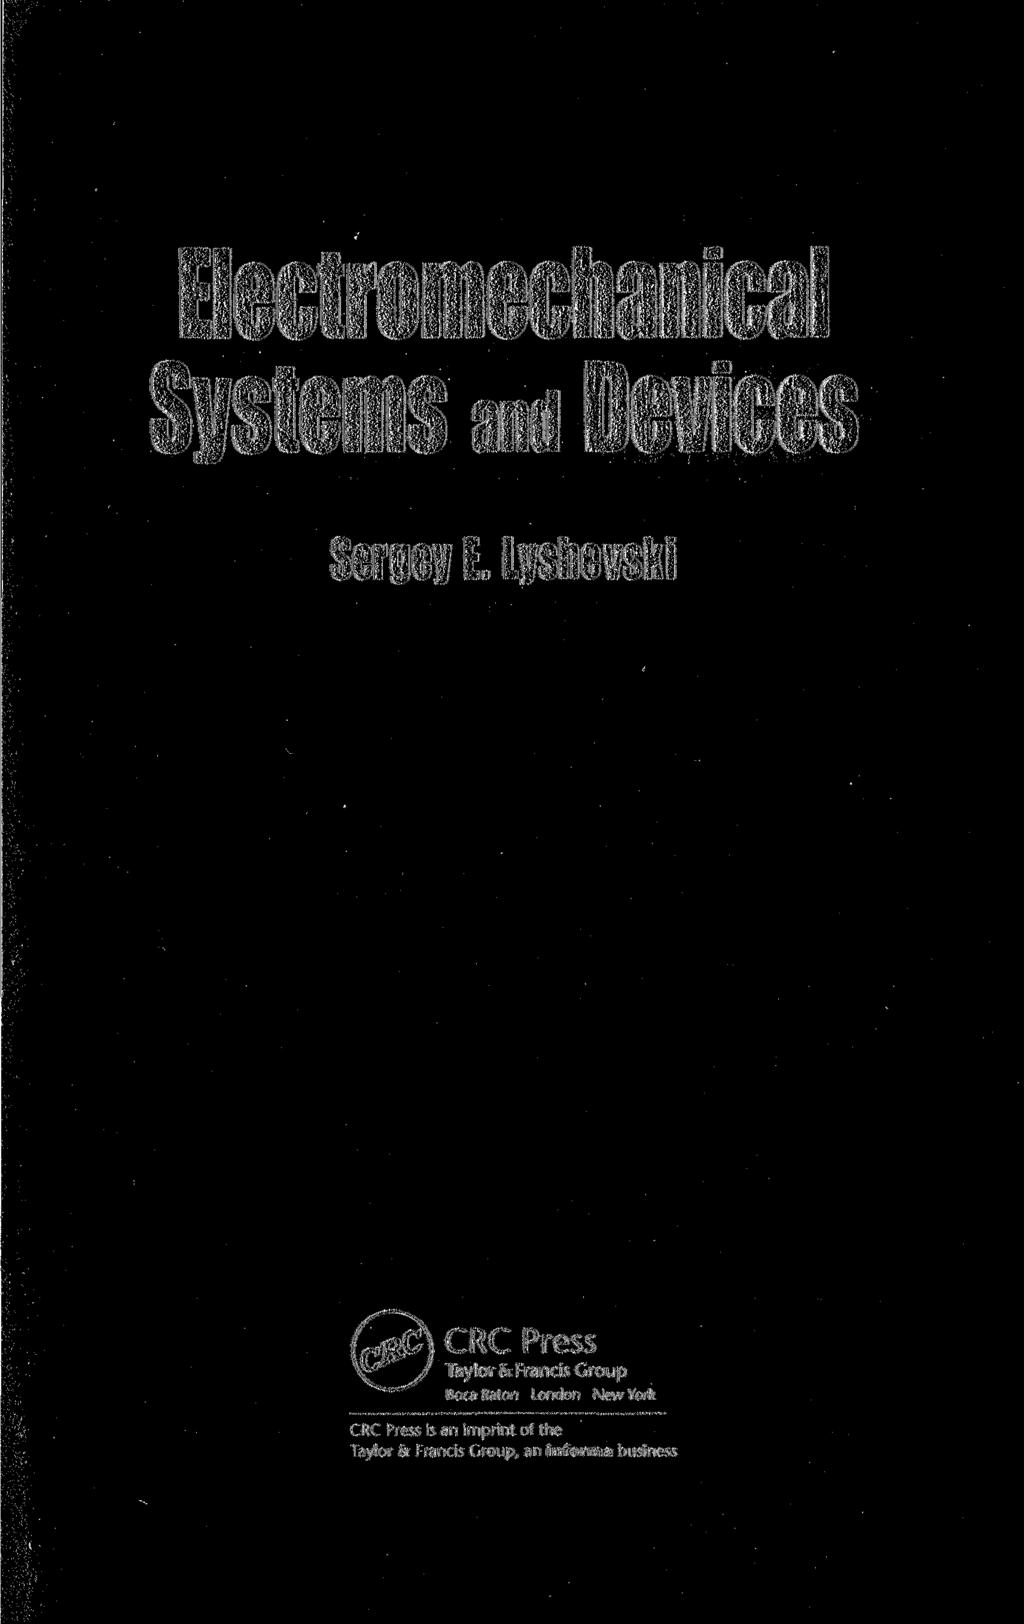 Electromechanical Systems aim Devices Sergey E.